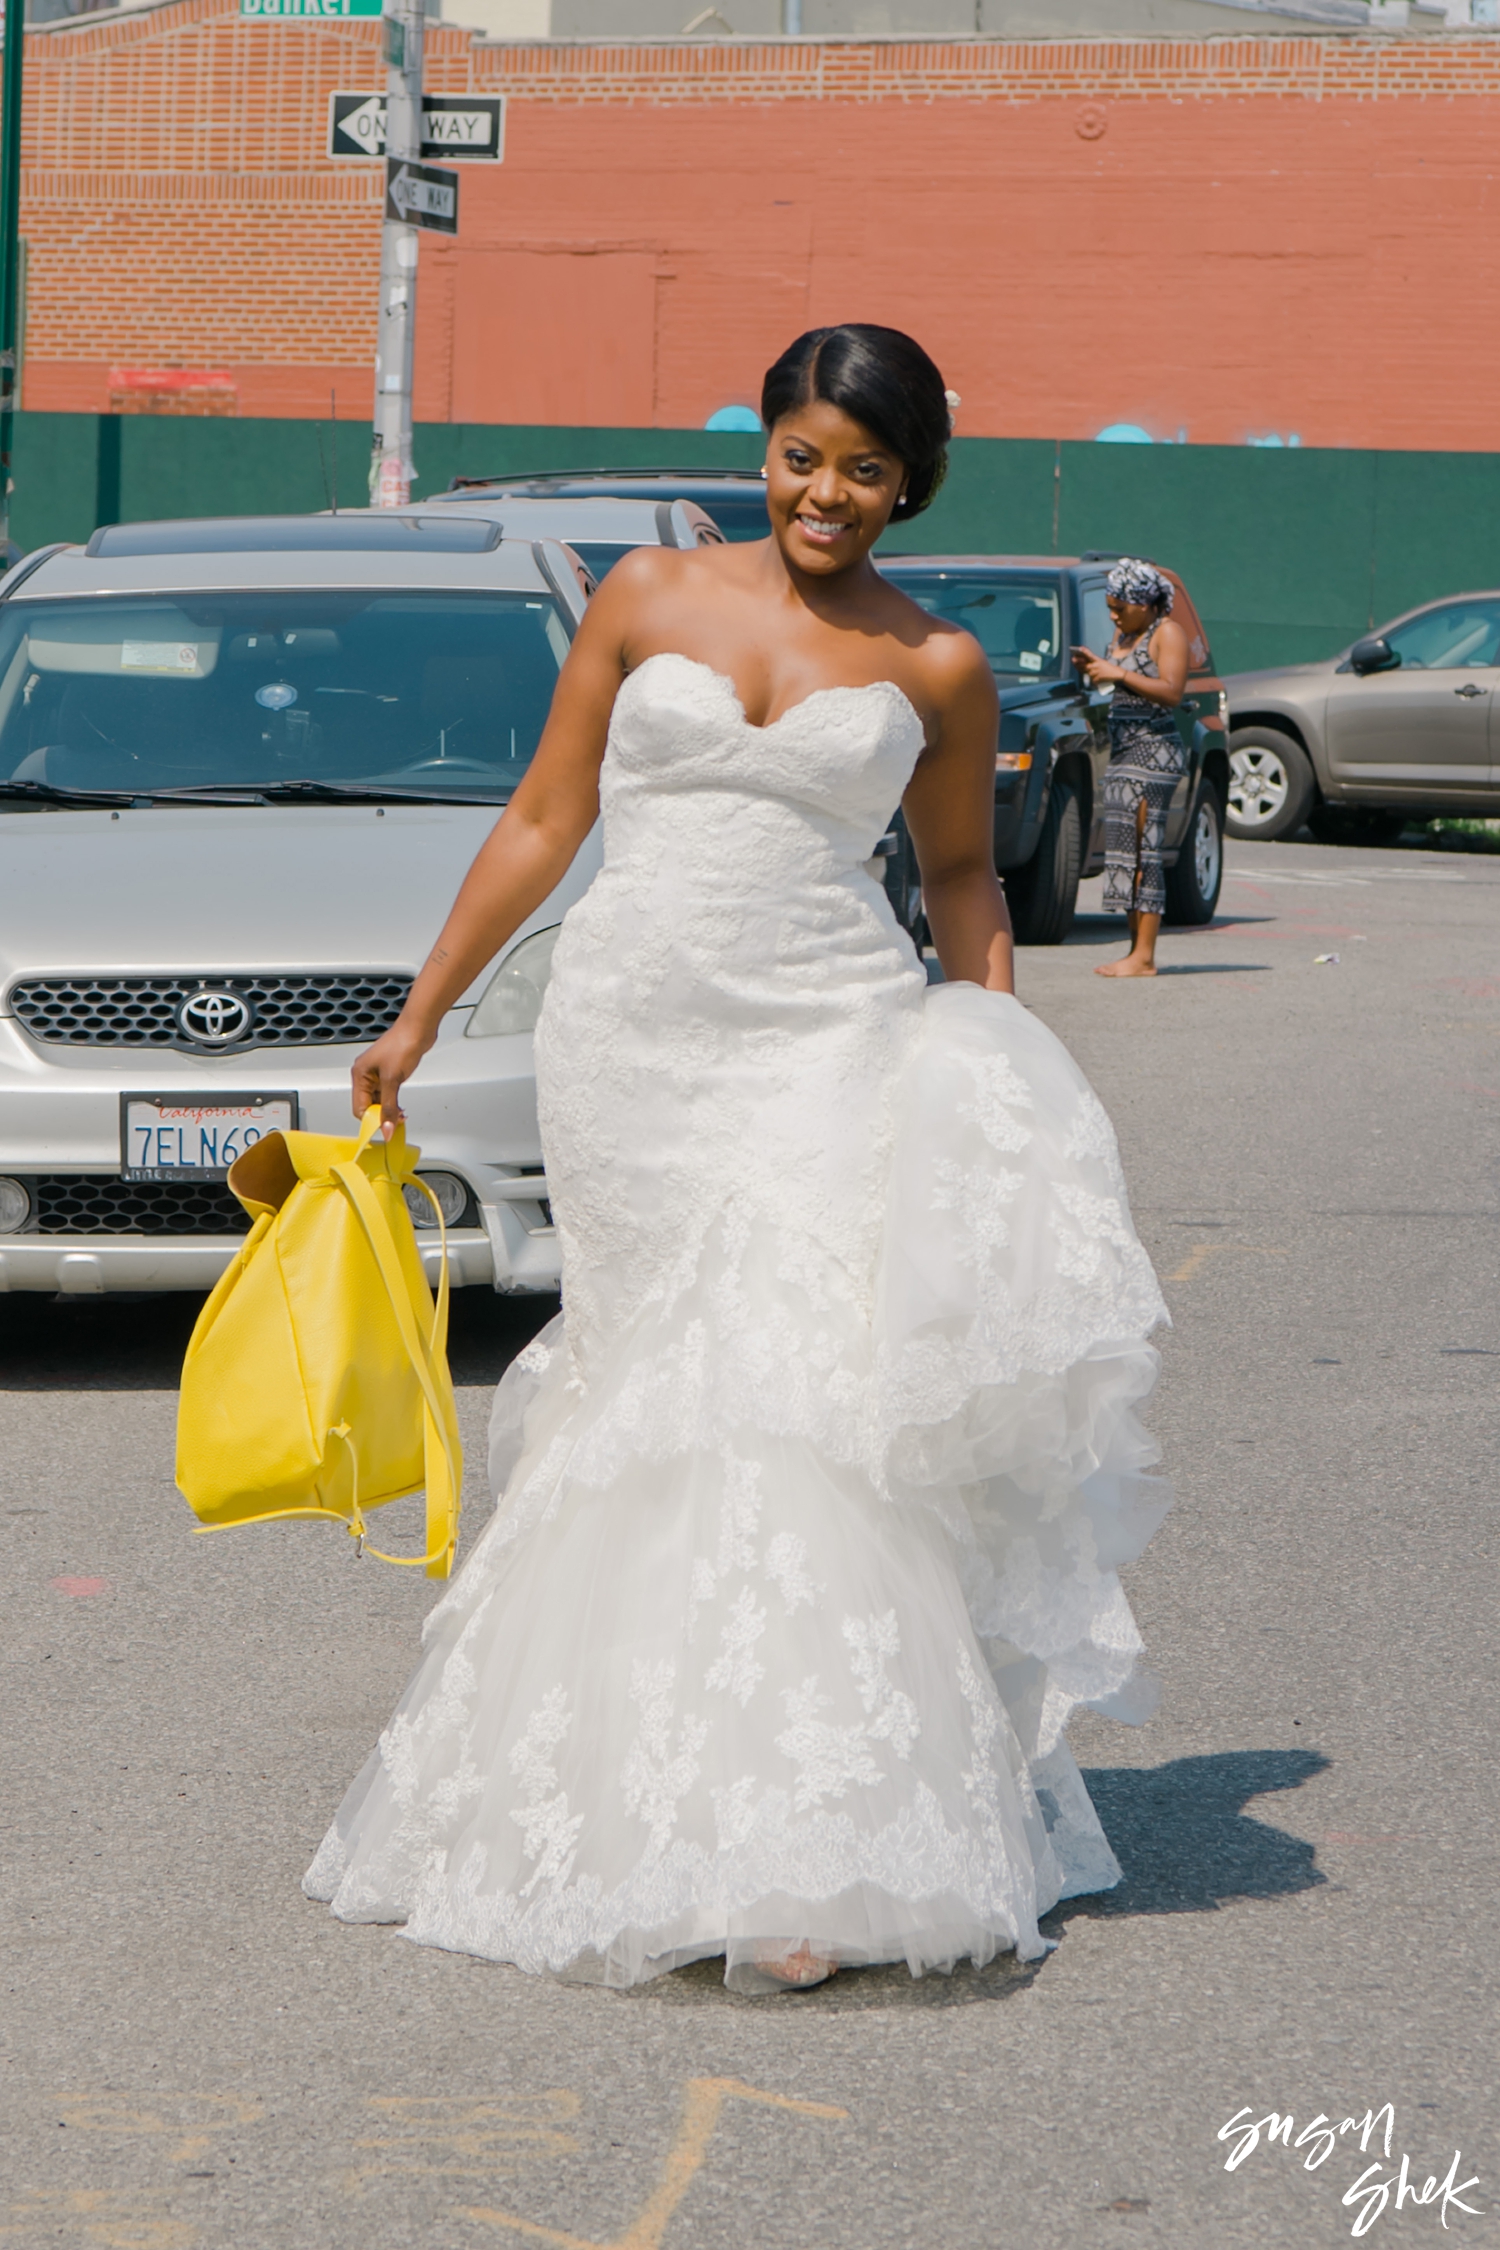 mymoon wedding, brooklyn wedding, brooklyn wedding photographer, susan shek photography, nyc wedding photographer